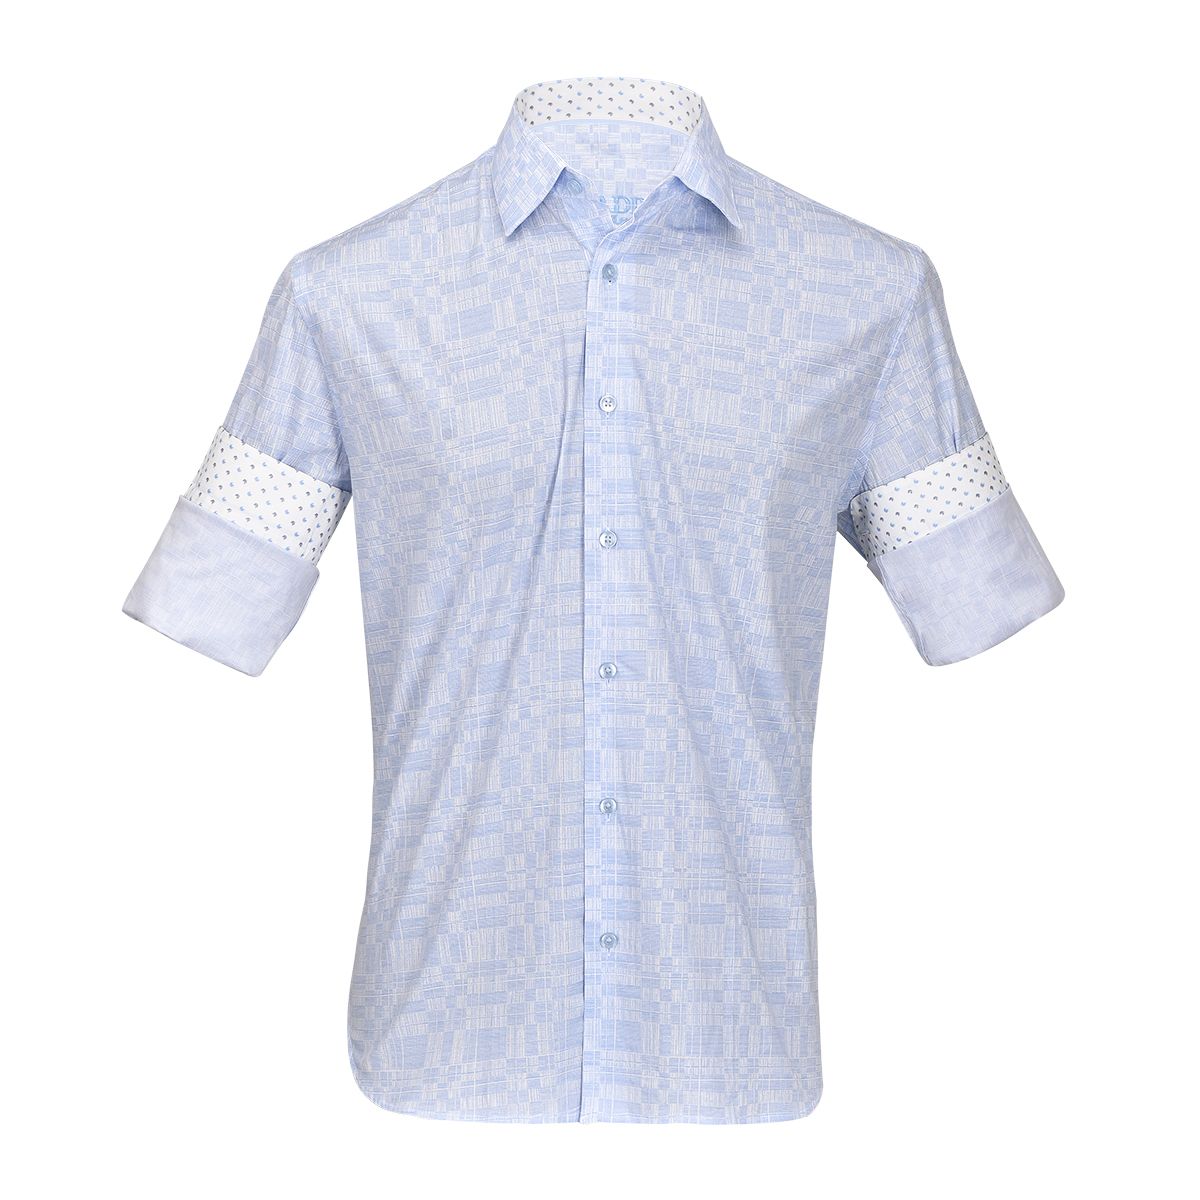 CM11005 - Cuadra blue fashion soft cotton abstract shirt for men-Kuet.us